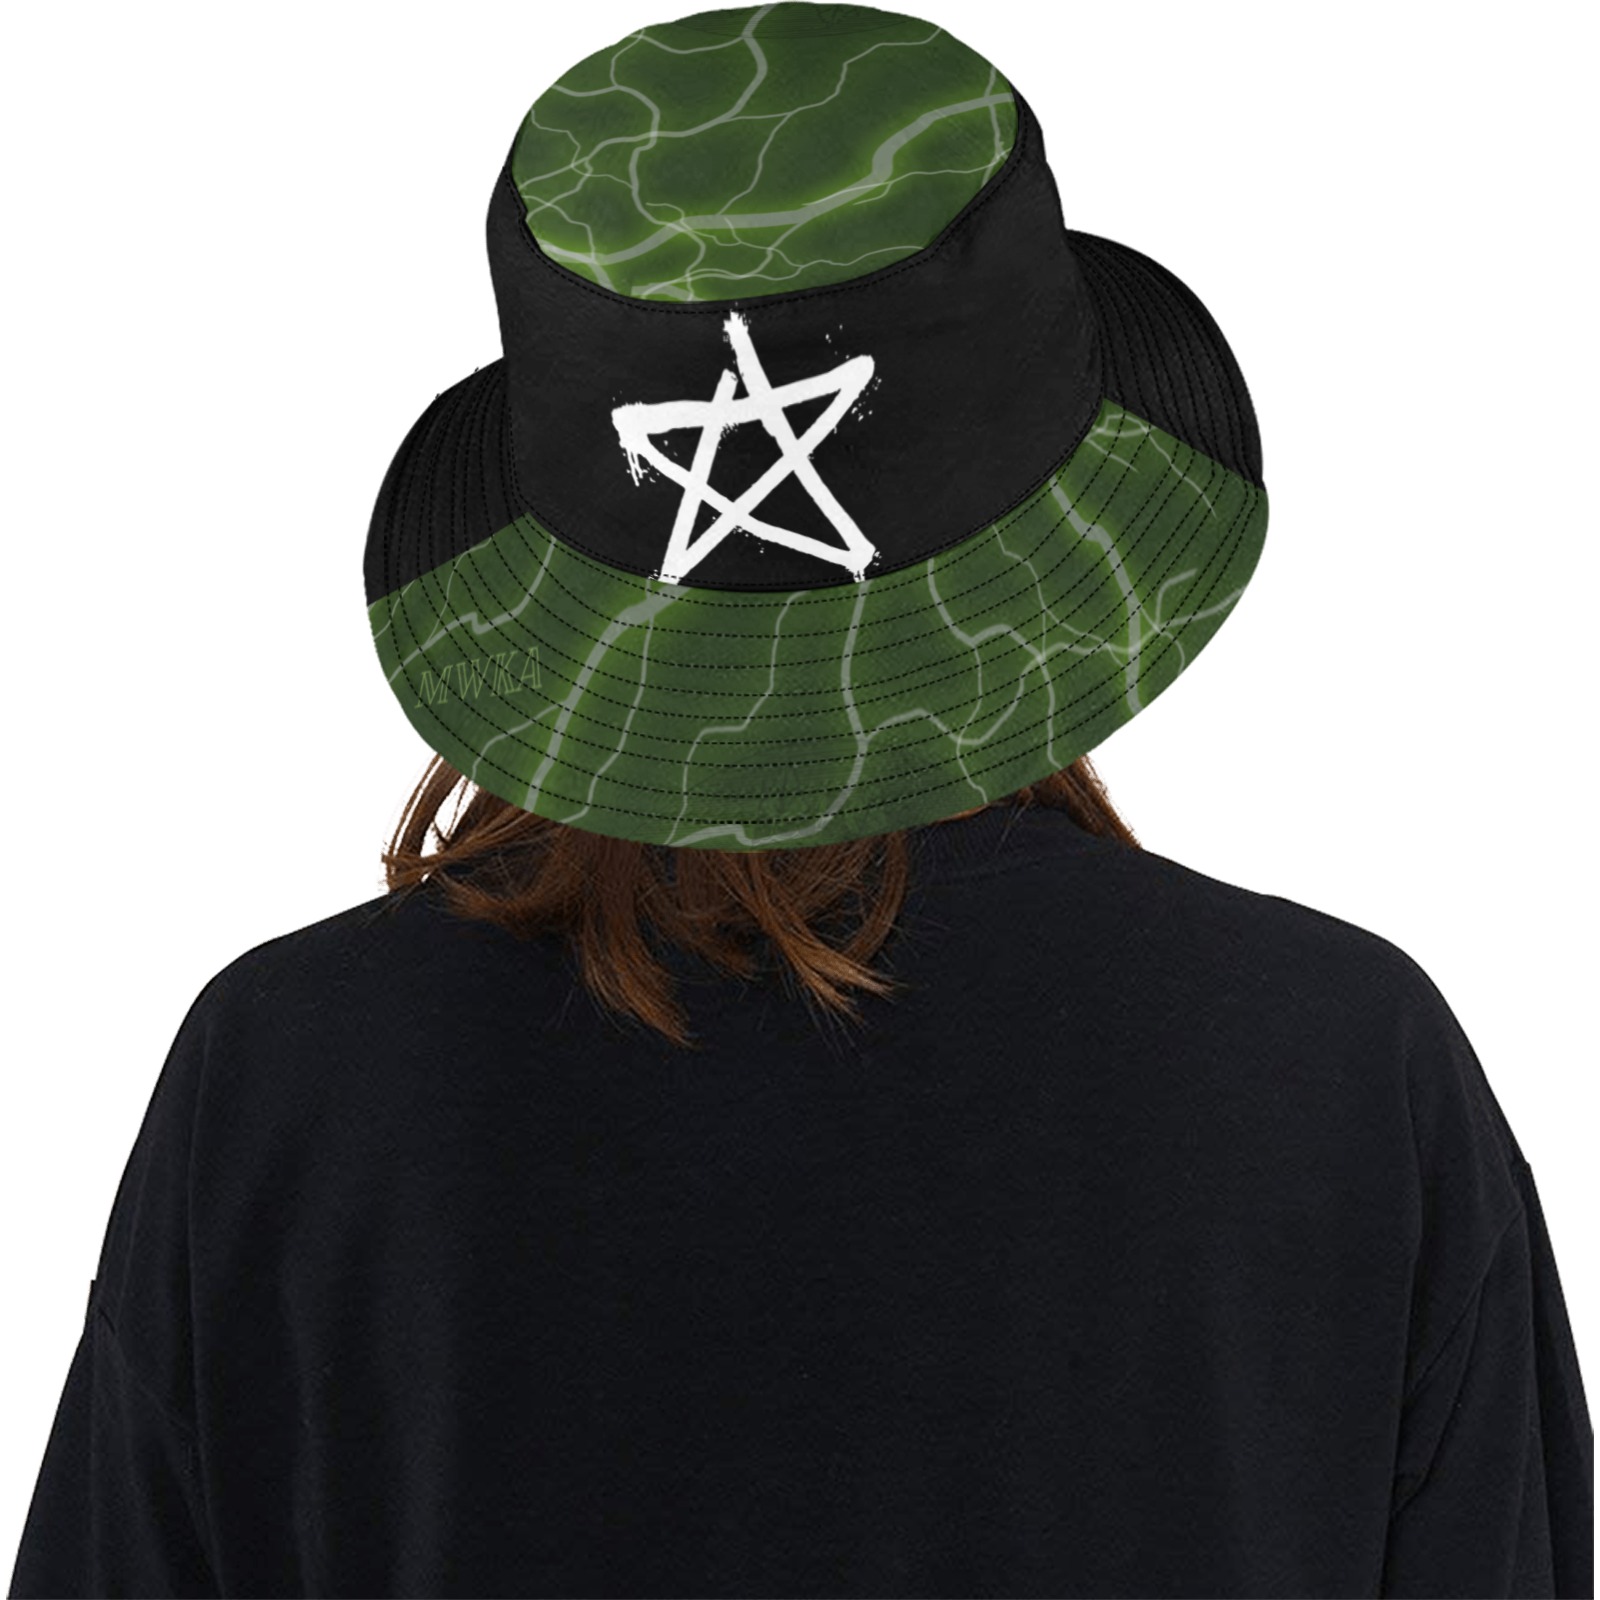 MWKA Unisex Summer Bucket Hat